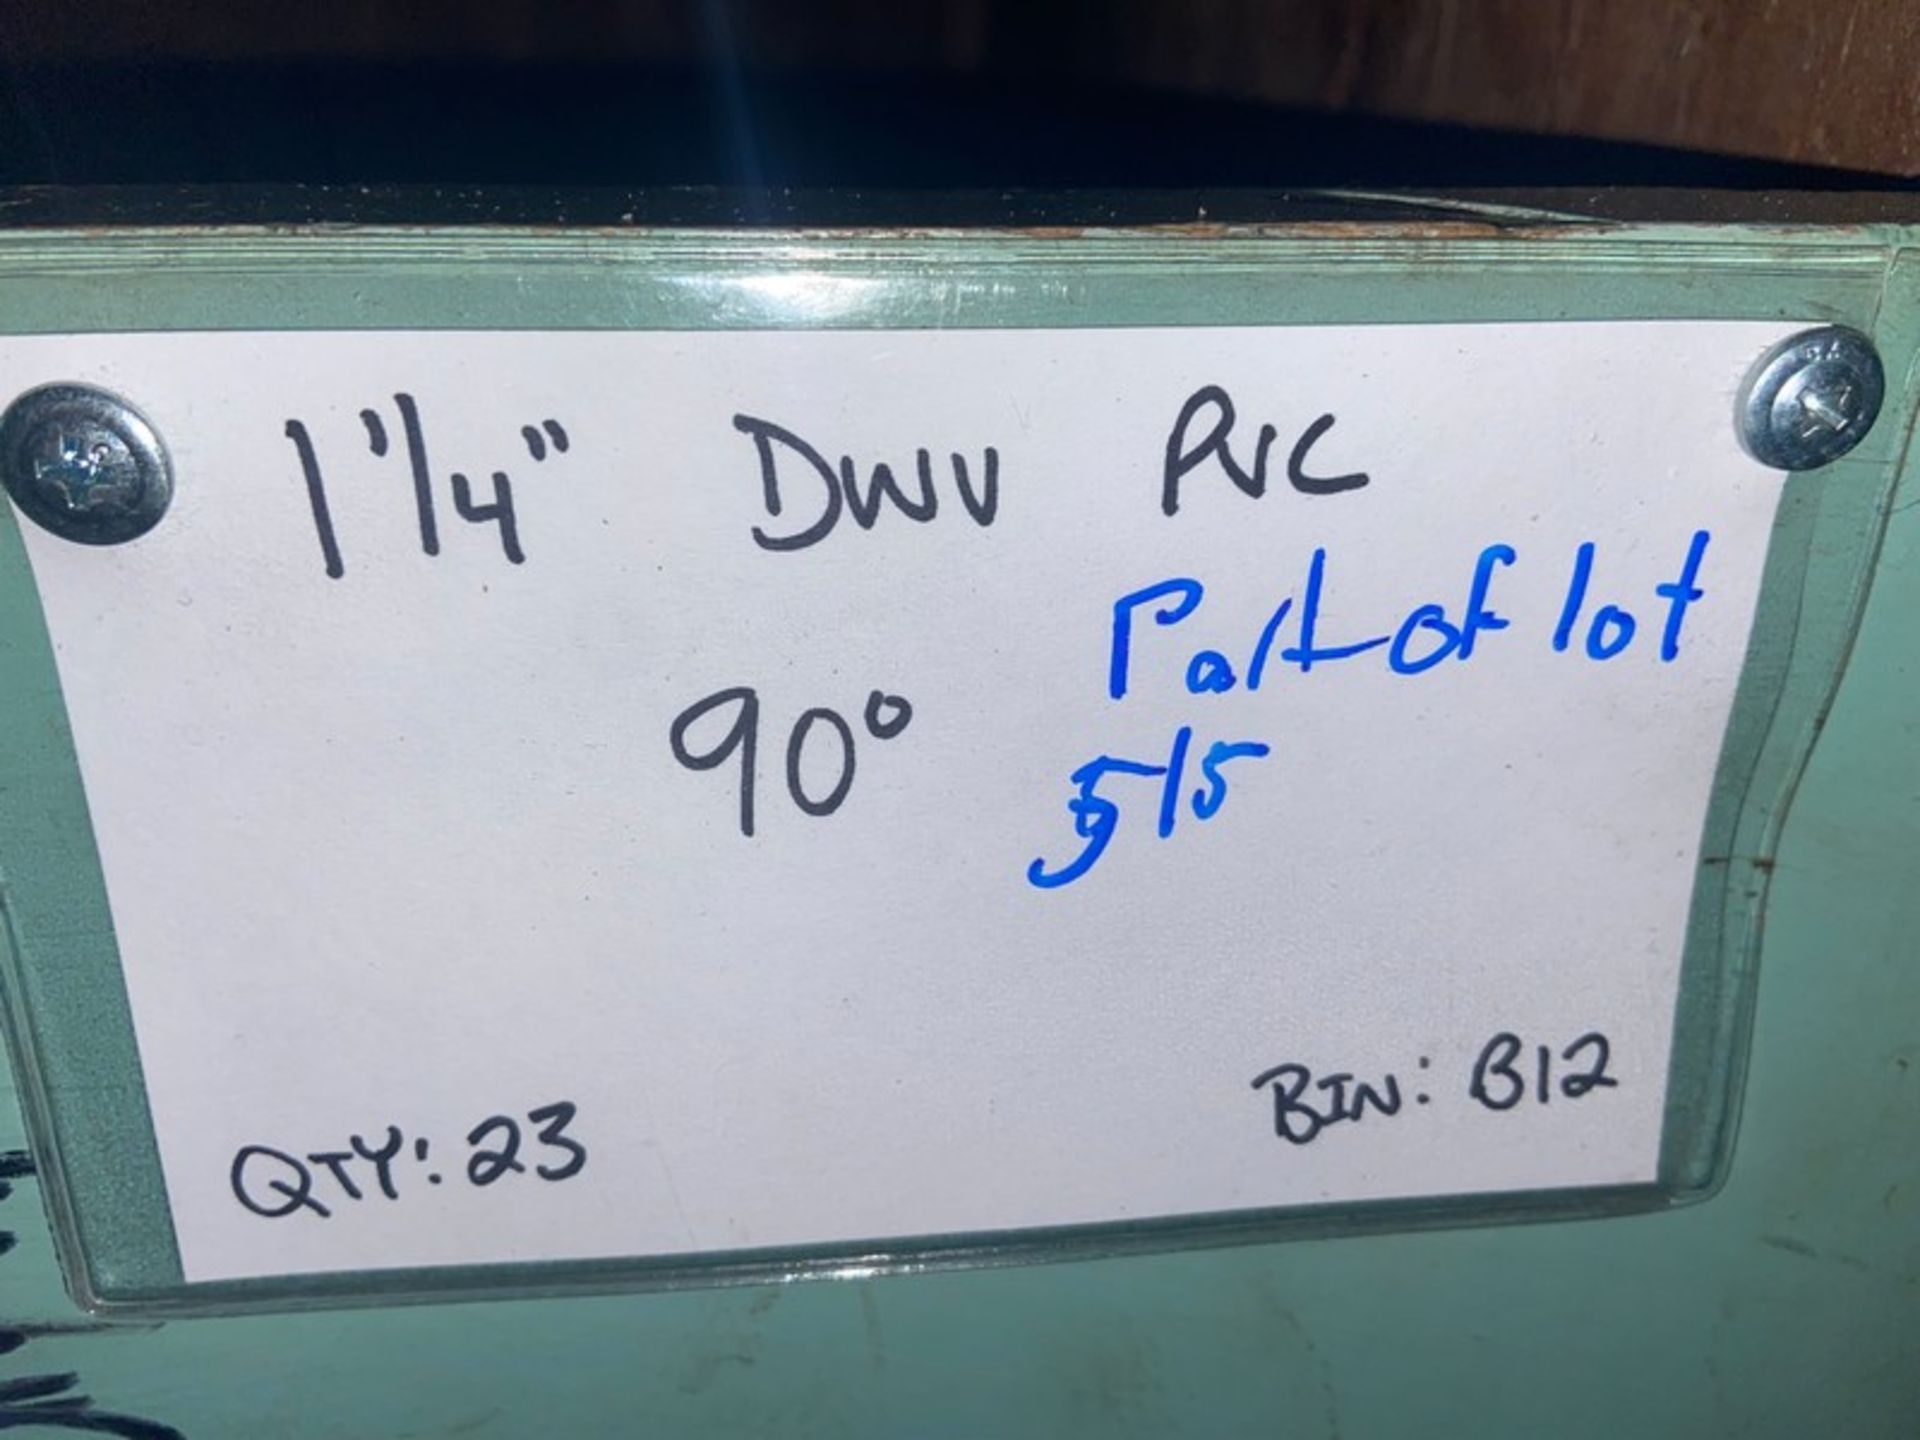 (6) 1 1/4’ DWV PVC 45’ (Bin: B12), Includes (23) 1 1/14’ DWV PVC 90’ (Bin: B12) (LOCATED IN - Bild 5 aus 8